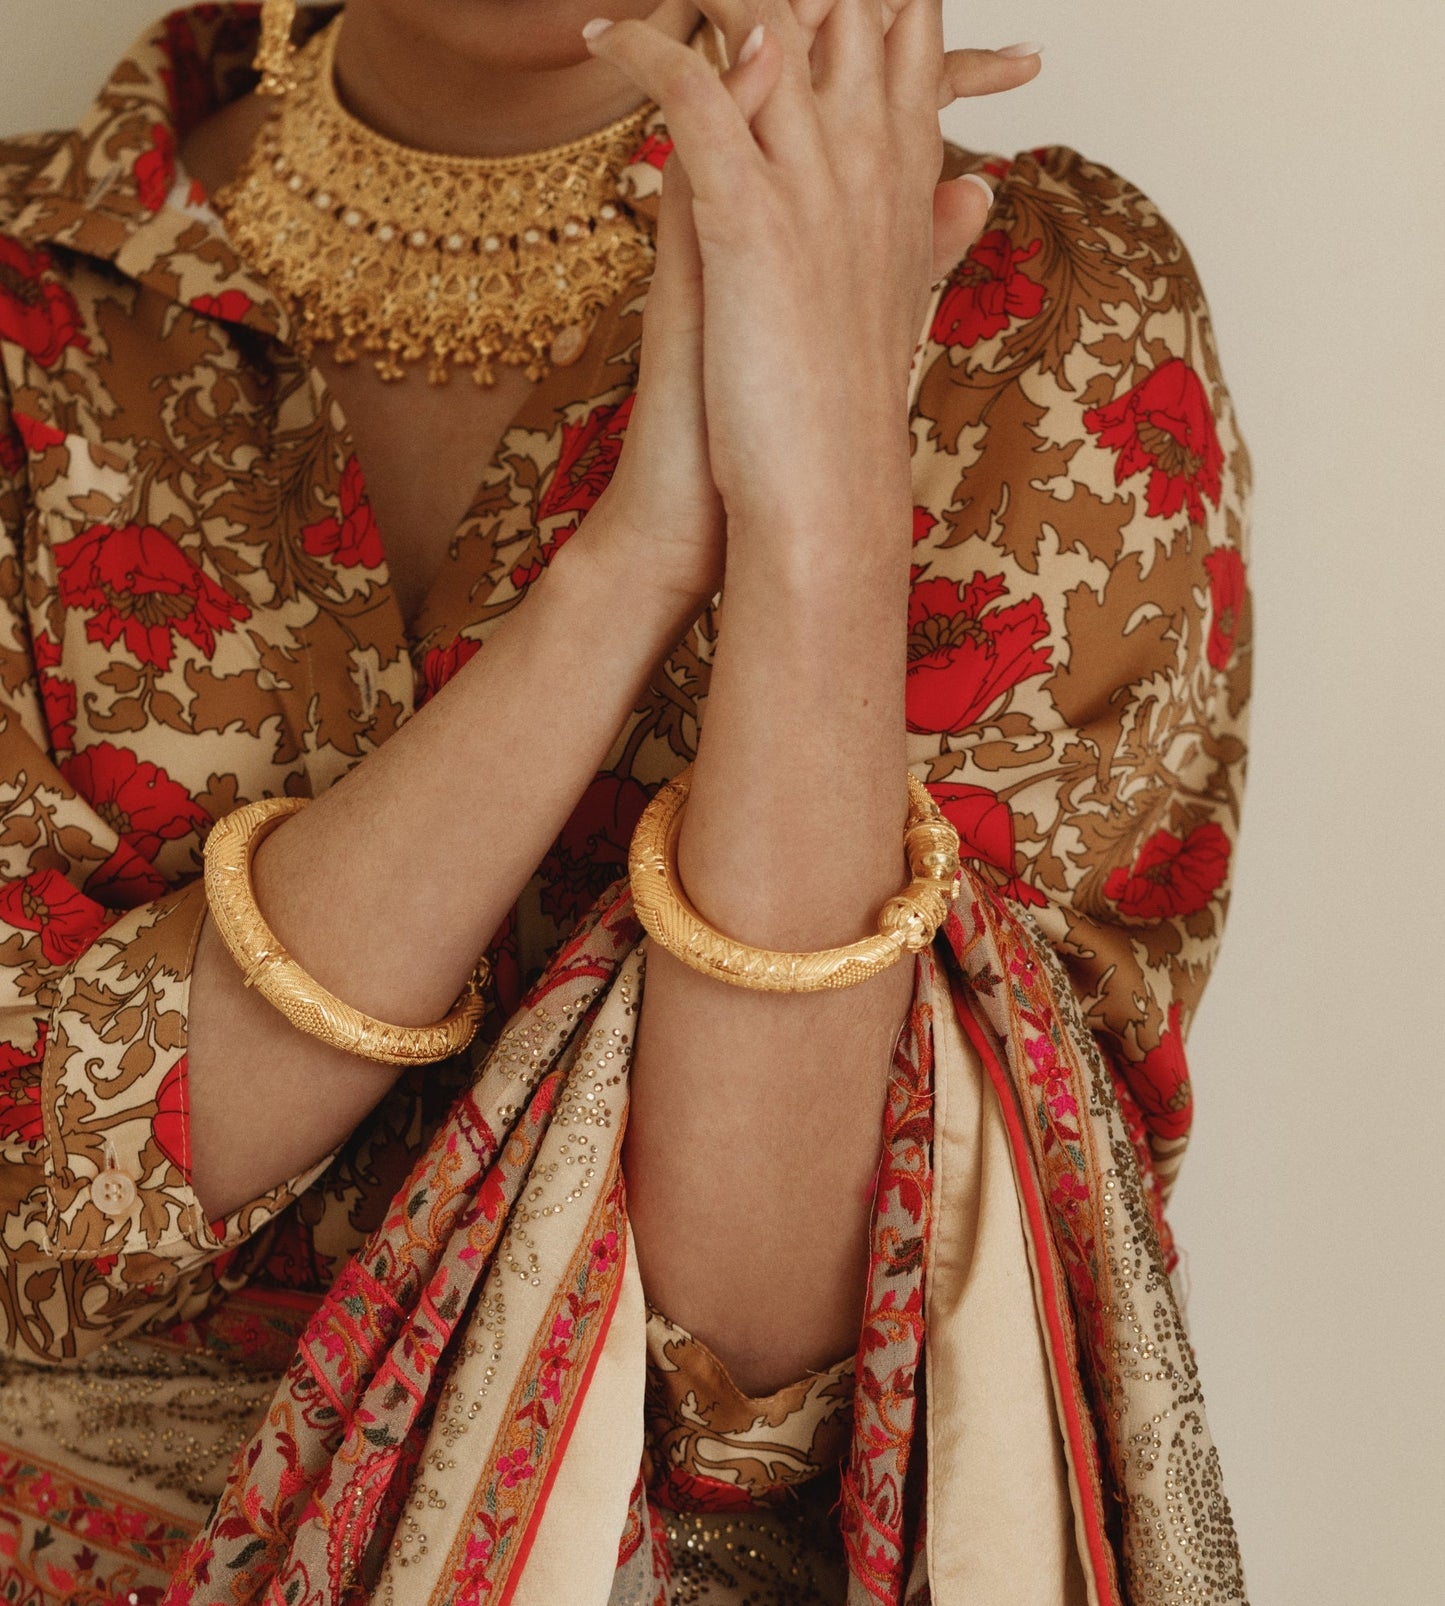 
                  
                    <img src="kimaya-kada-22k-gold.jpg" alt="Kimaya Women's Pair of Kada in 22k Gold - a beautiful image showcasing a pair of traditional Indian bangles, known as kadas, made of 22k gold and featuring intricate designs and a stunning, glossy finish."/>
                  
                